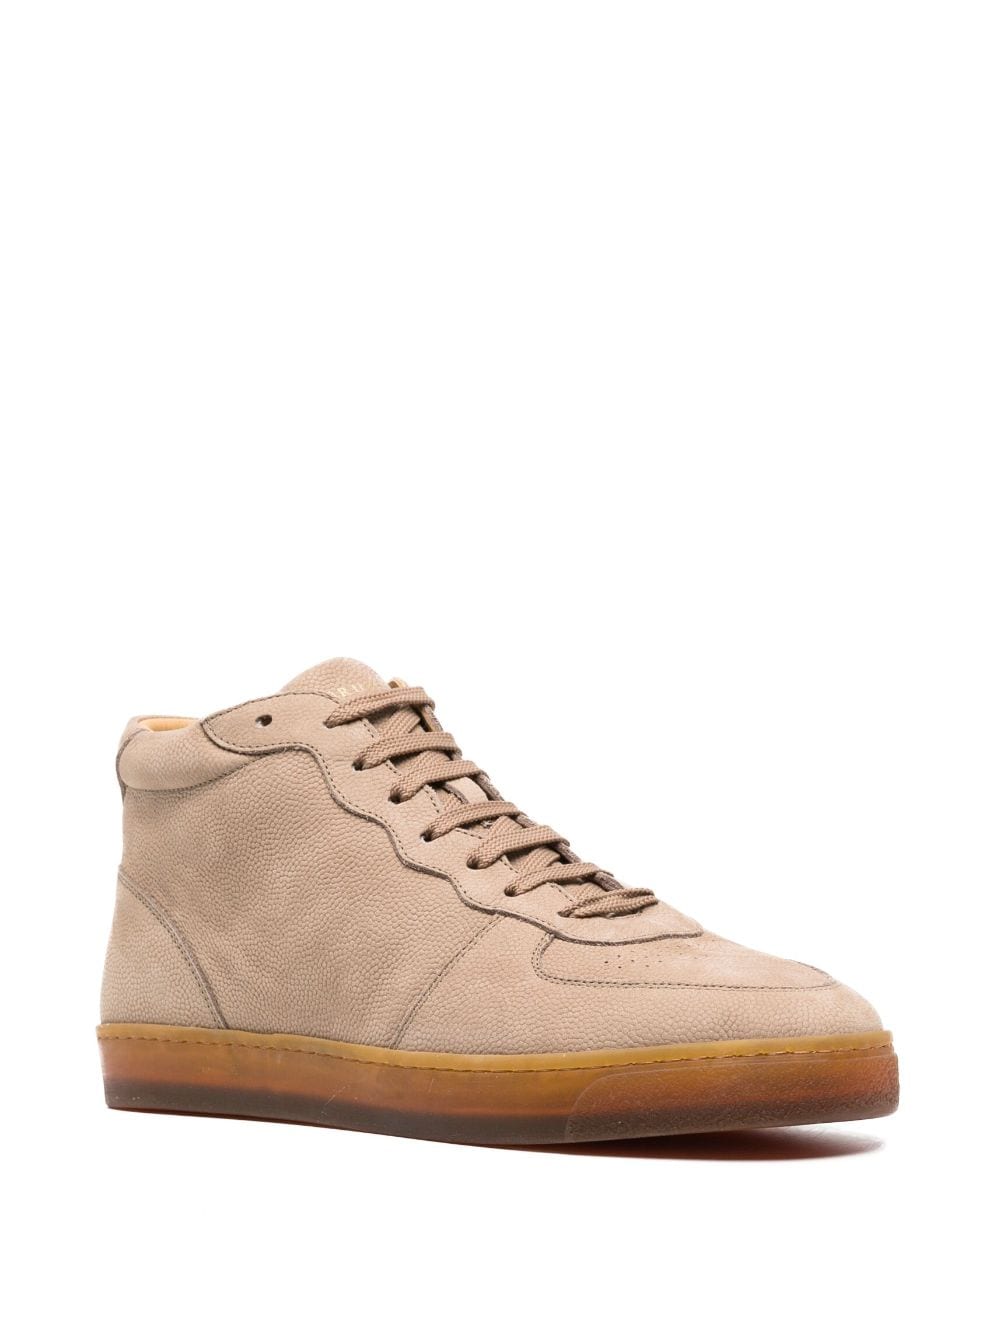 Brunello Cucinelli high-top Leather Sneakers - Farfetch